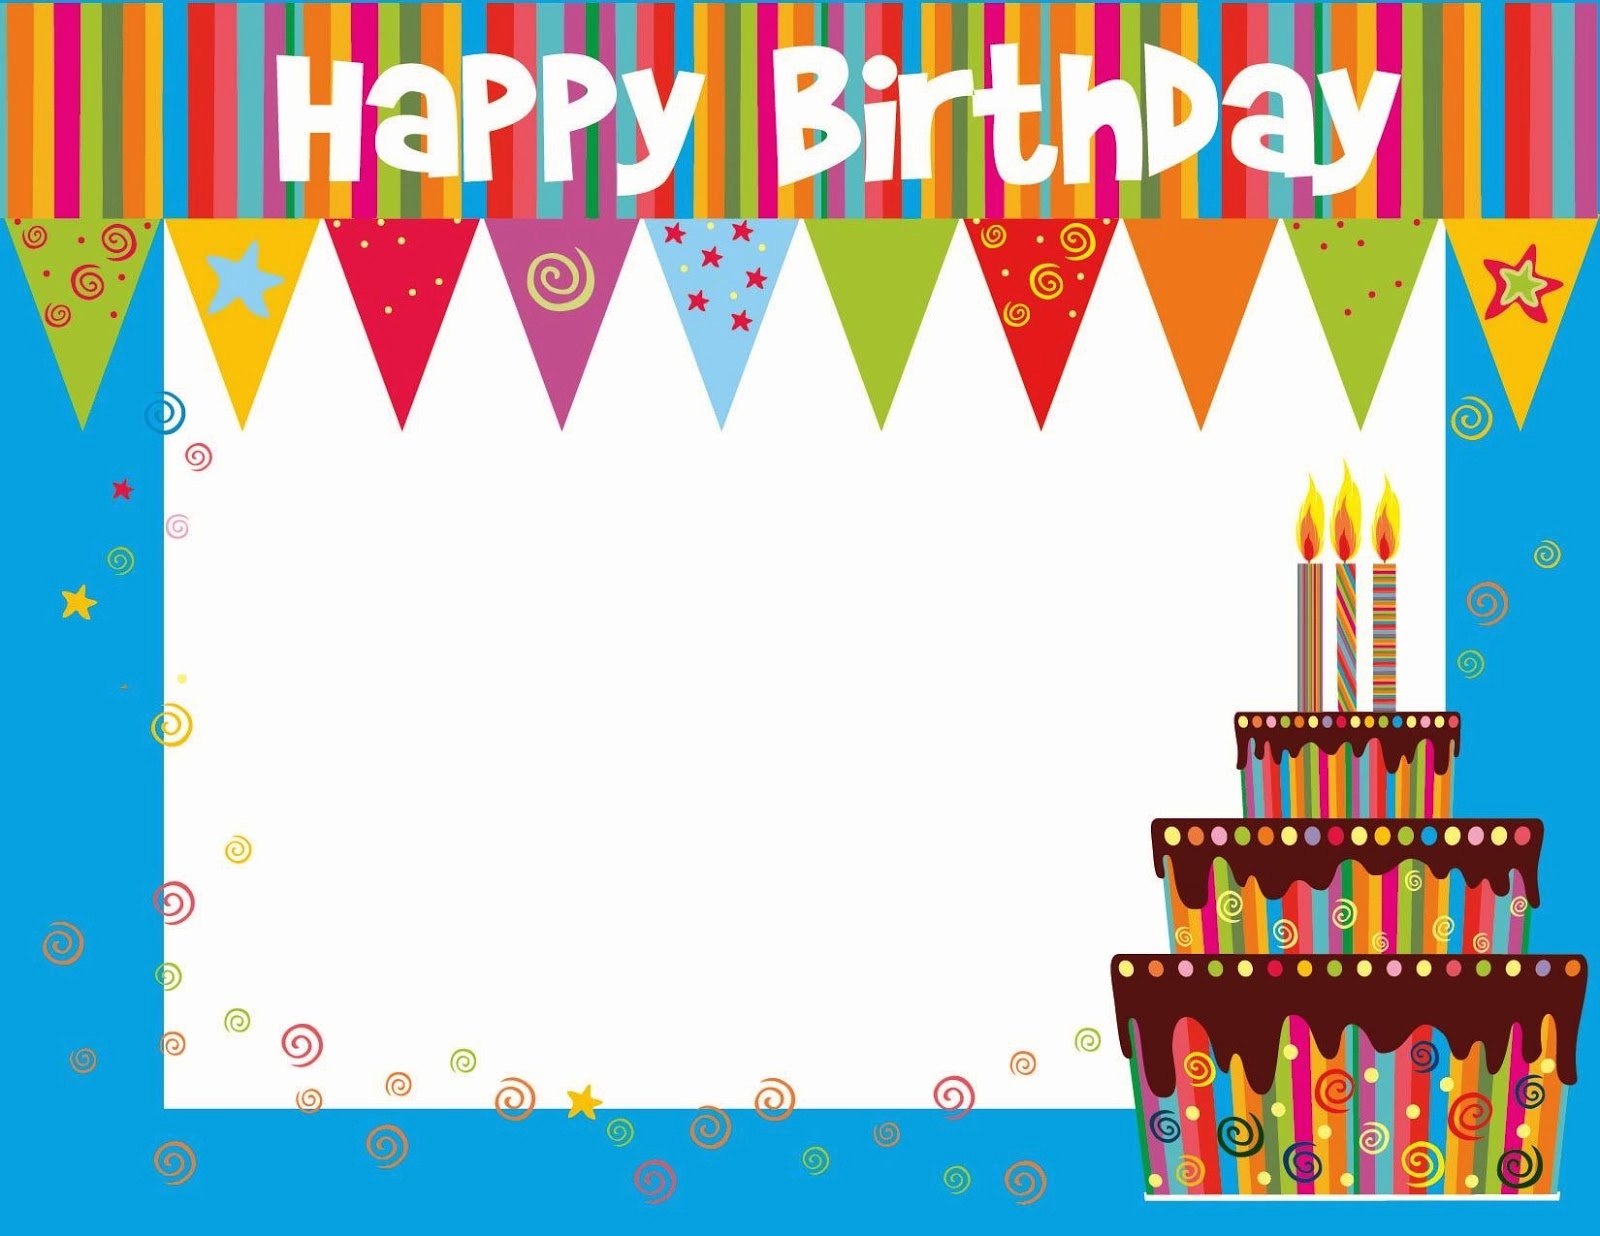 Hallmark Big Birthday Cards Inspirational Inspirational Hallmark - Free Printable Hallmark Birthday Cards